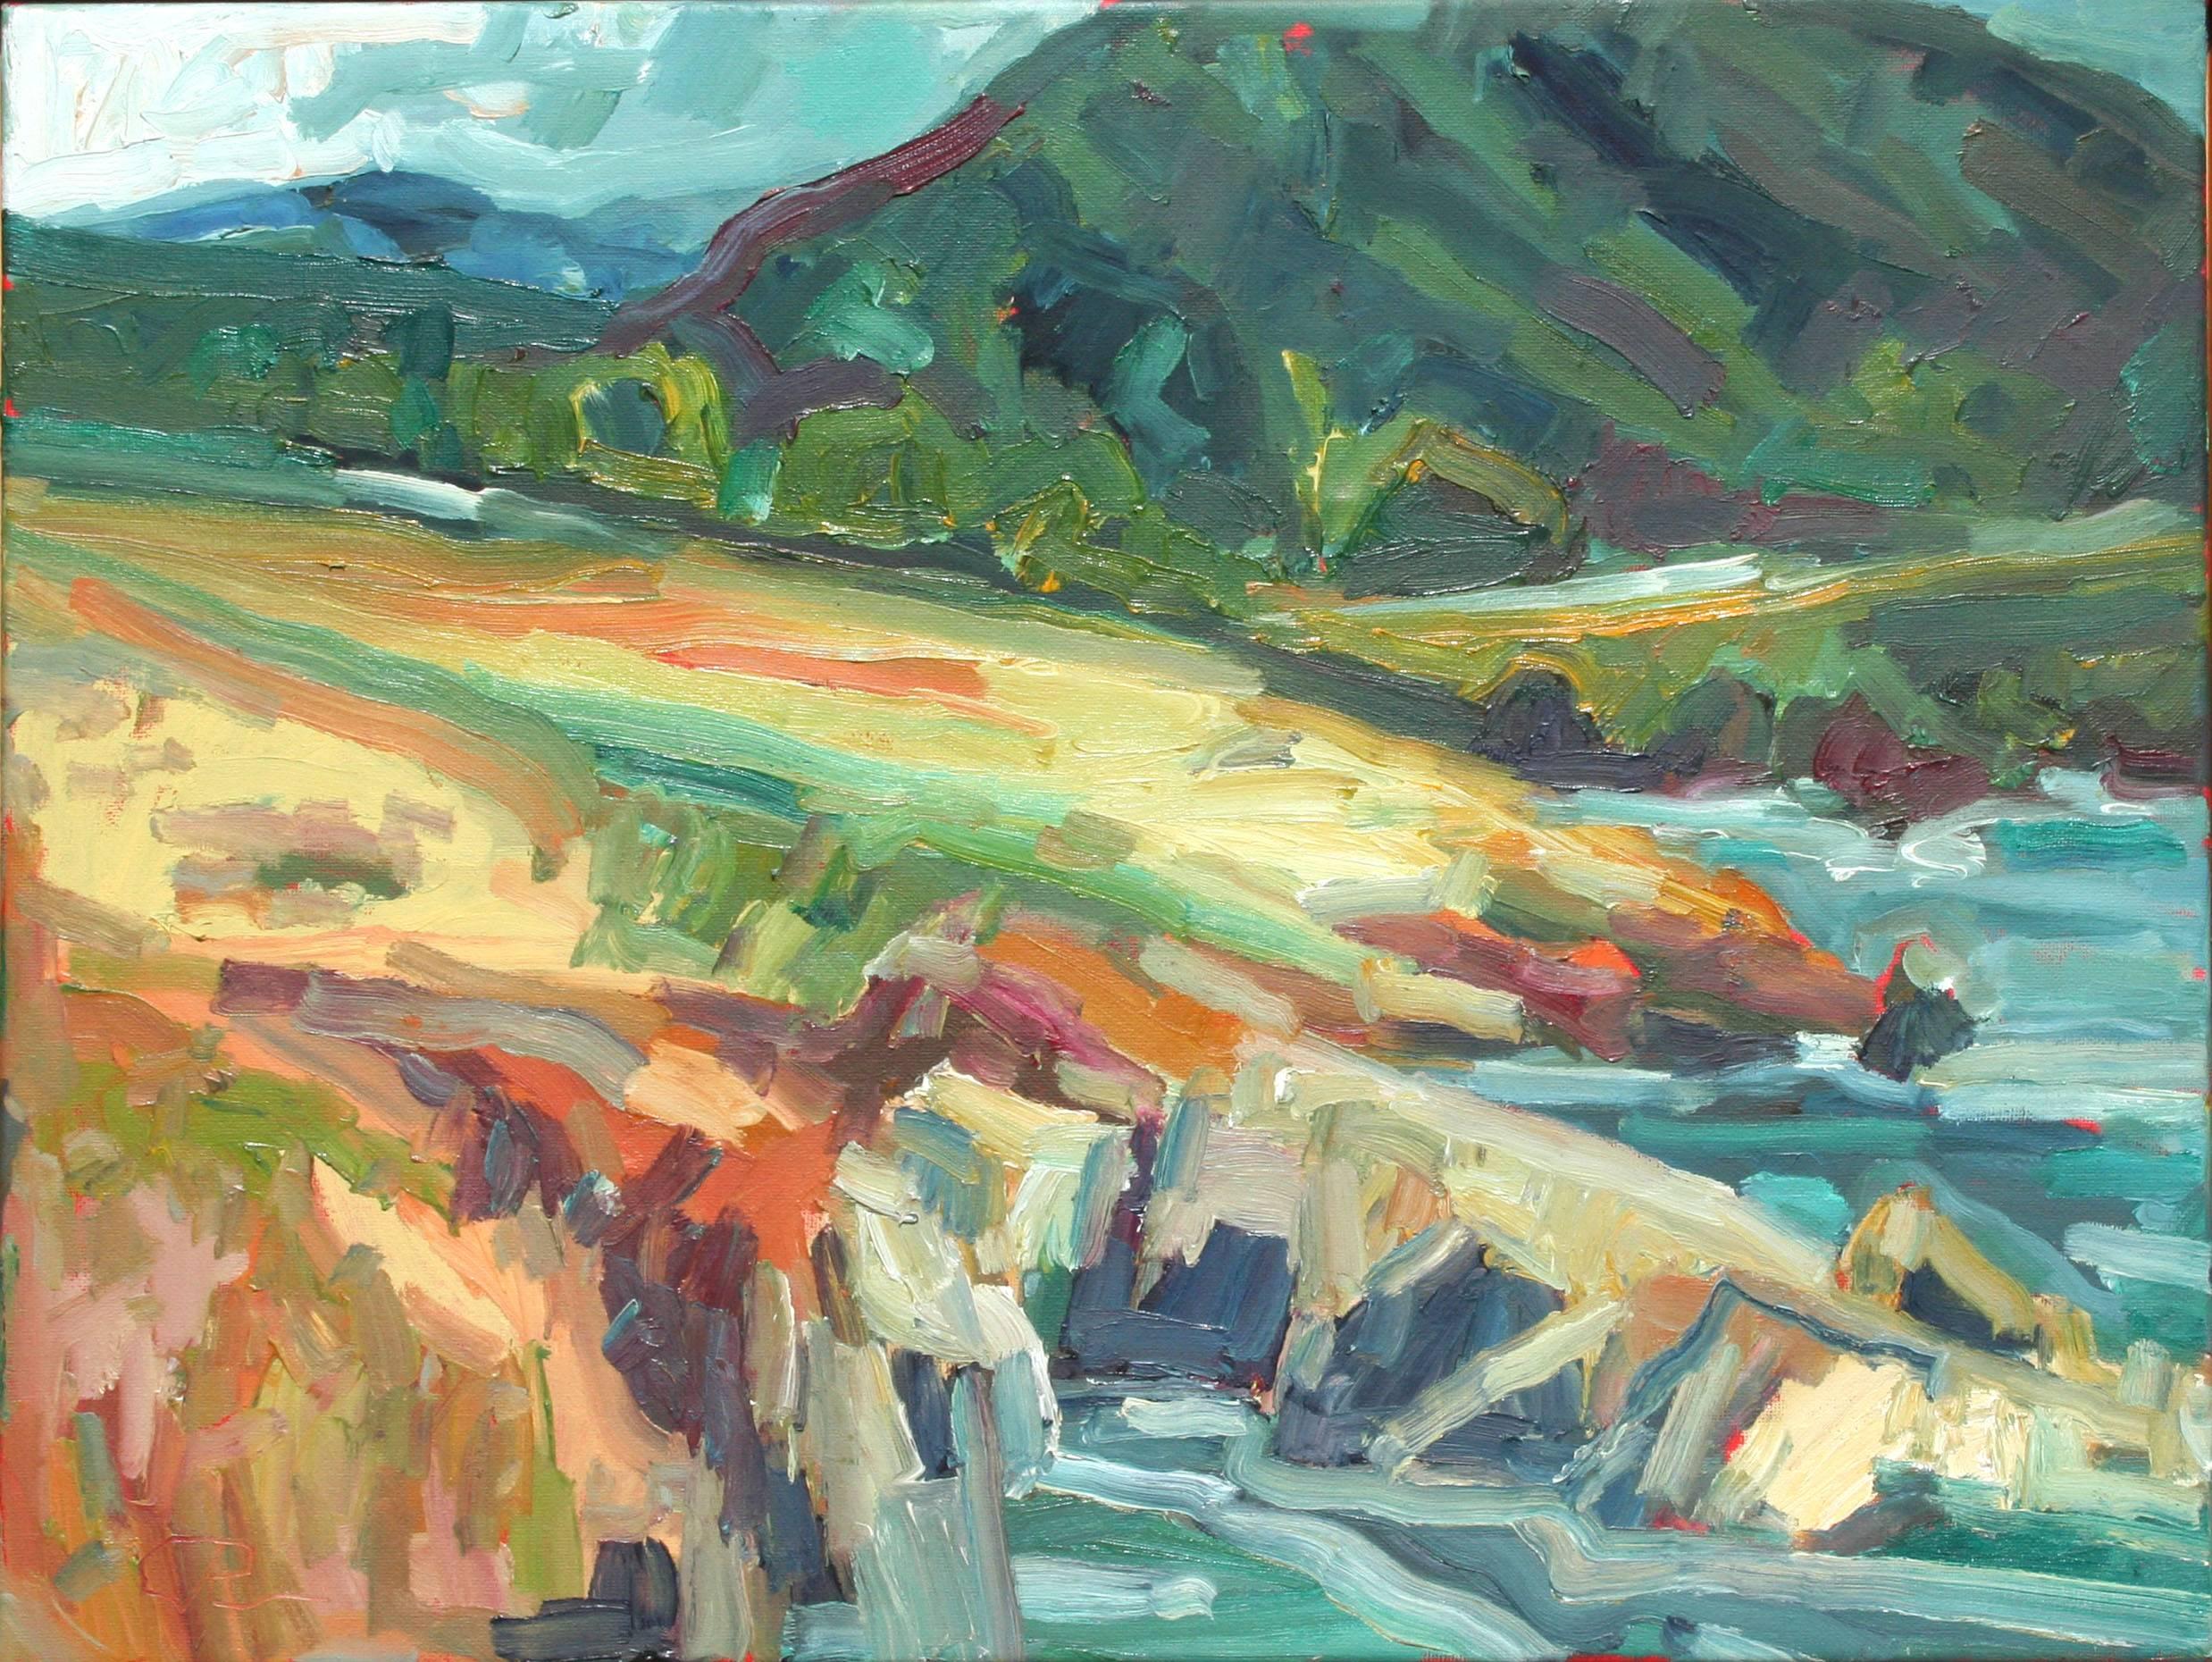 Road to Big Sur by Robert Crawford - Painting by John Crawford